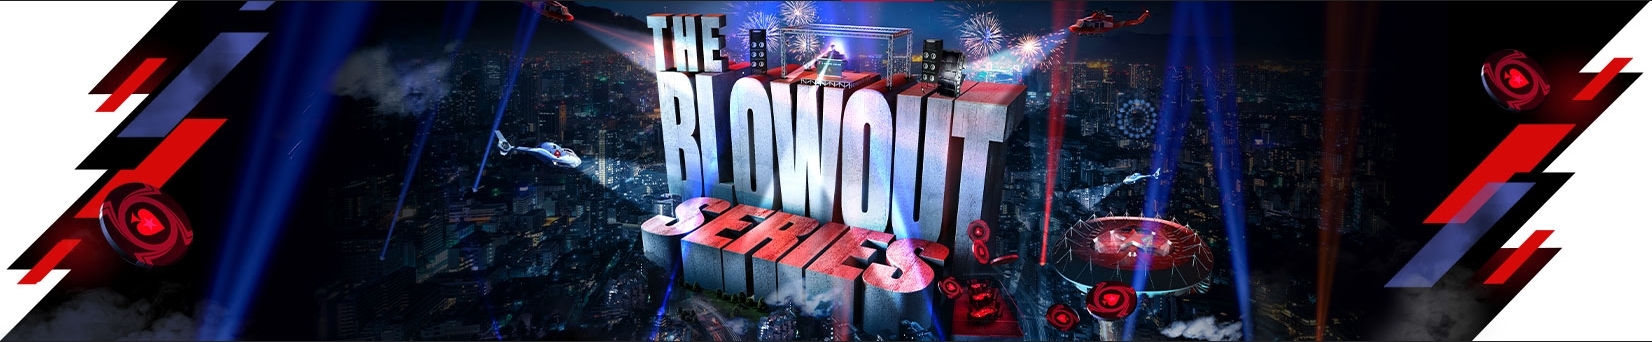 Blowout Series: 60M$ Guaranteed Late December on PokerStars